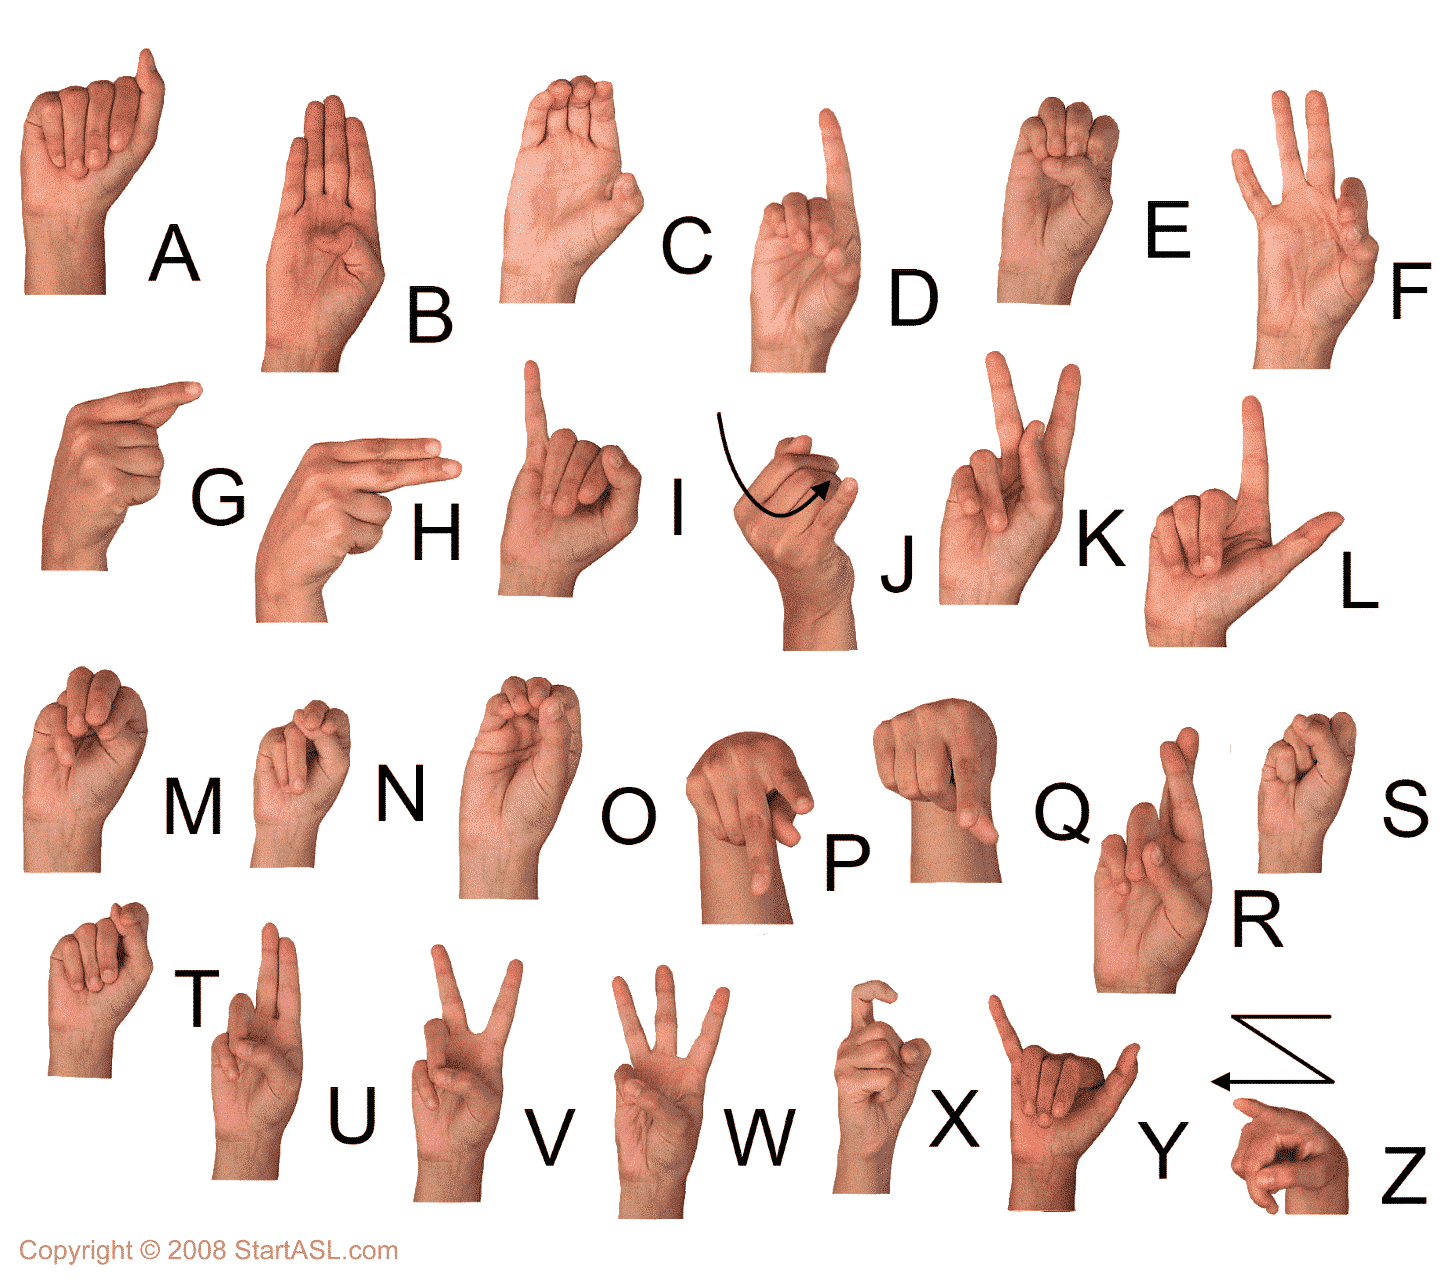 english sign language alphabet